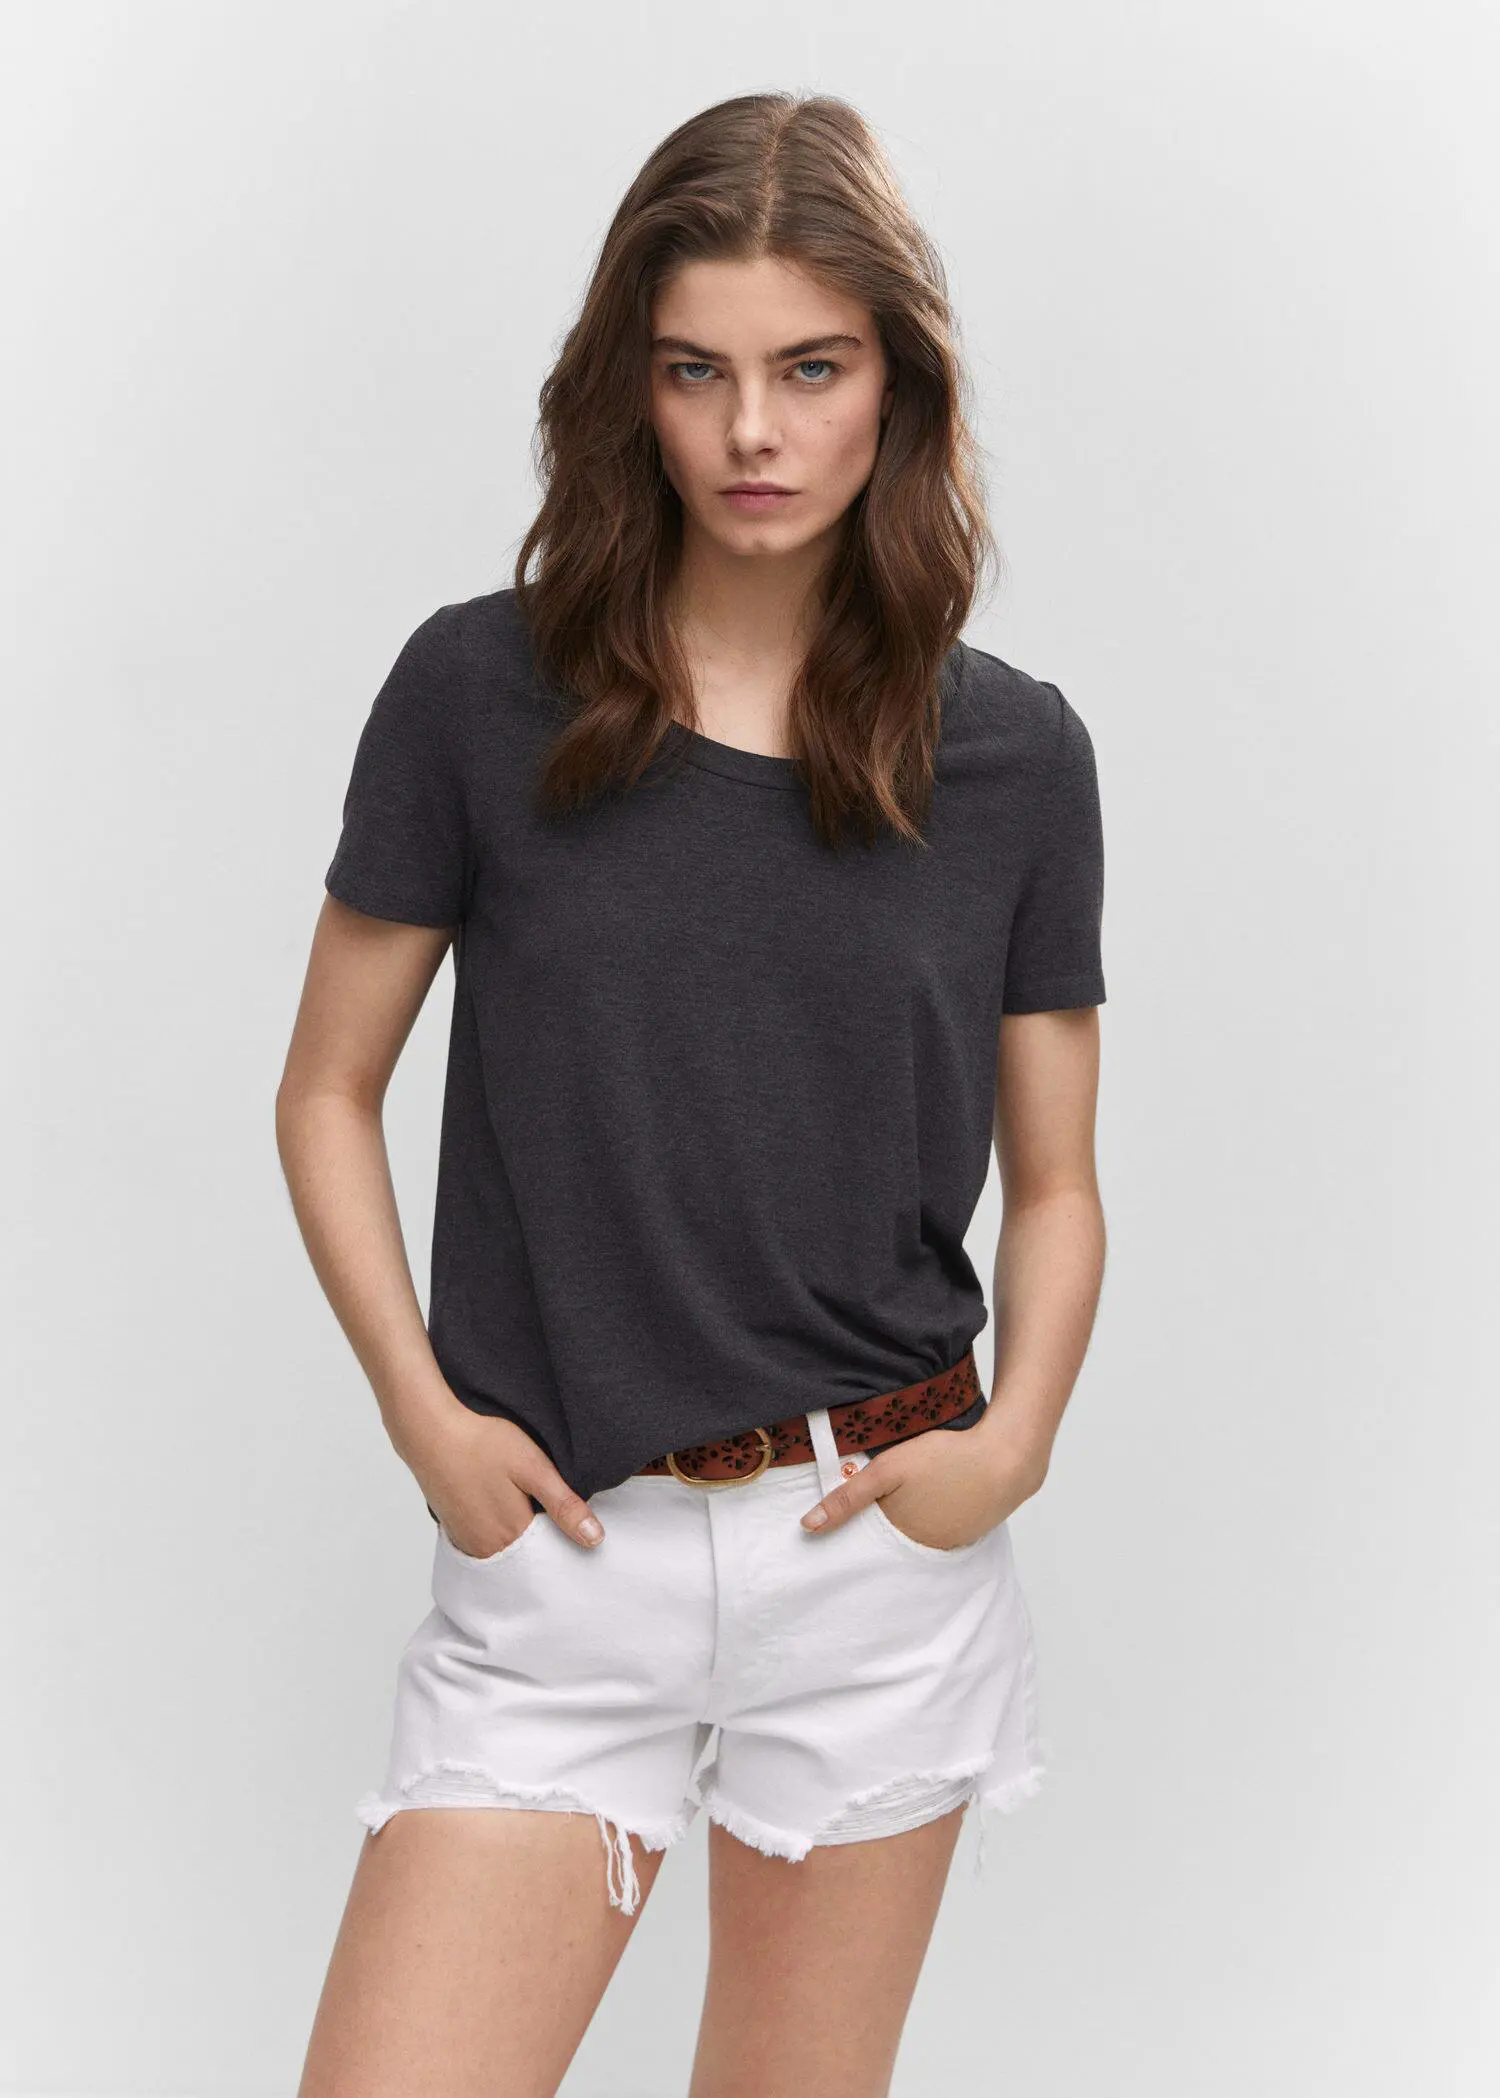 Mango Short sleeve t-shirt. a woman wearing white shorts and a black t-shirt. 